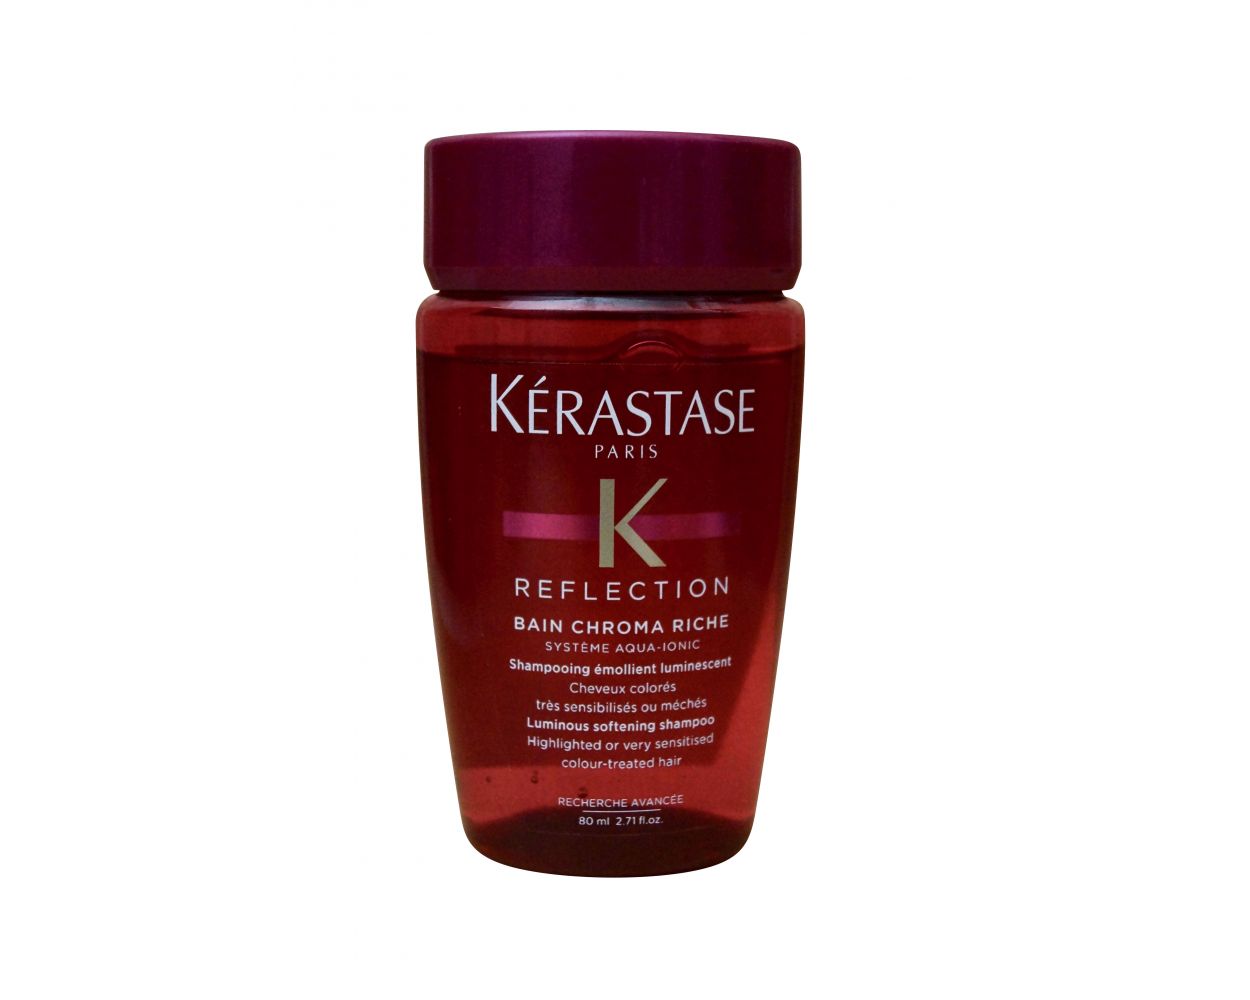 8. "Kerastase Reflection Bain Chromatique Riche Shampoo" - wide 6